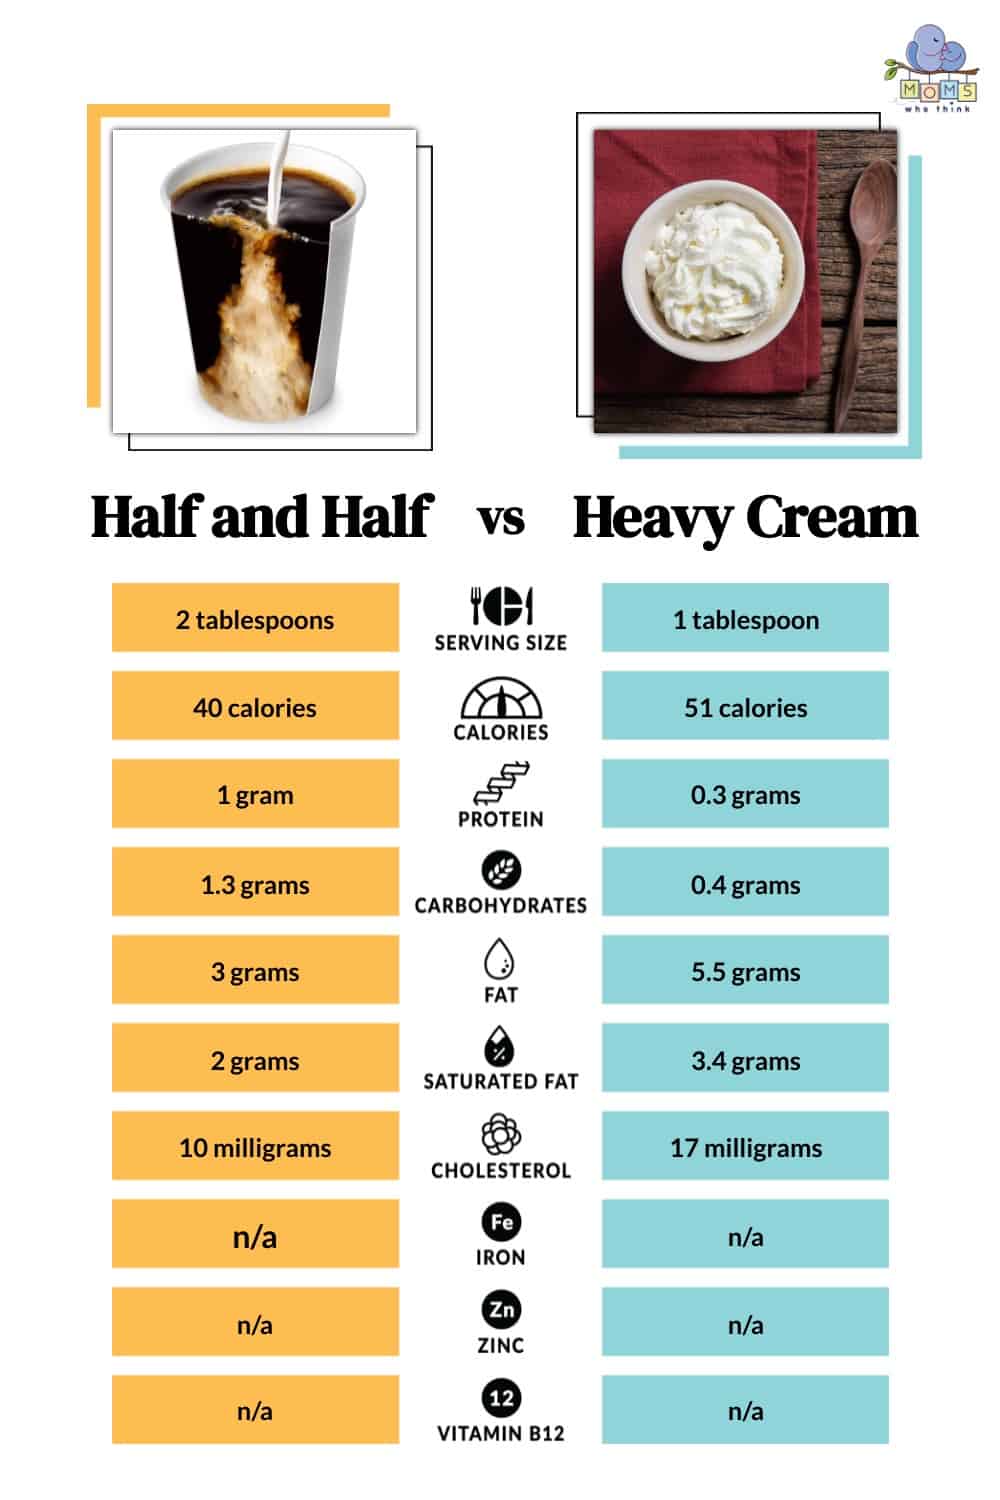 Half and Half vs Heavy Cream Nutritional Facts